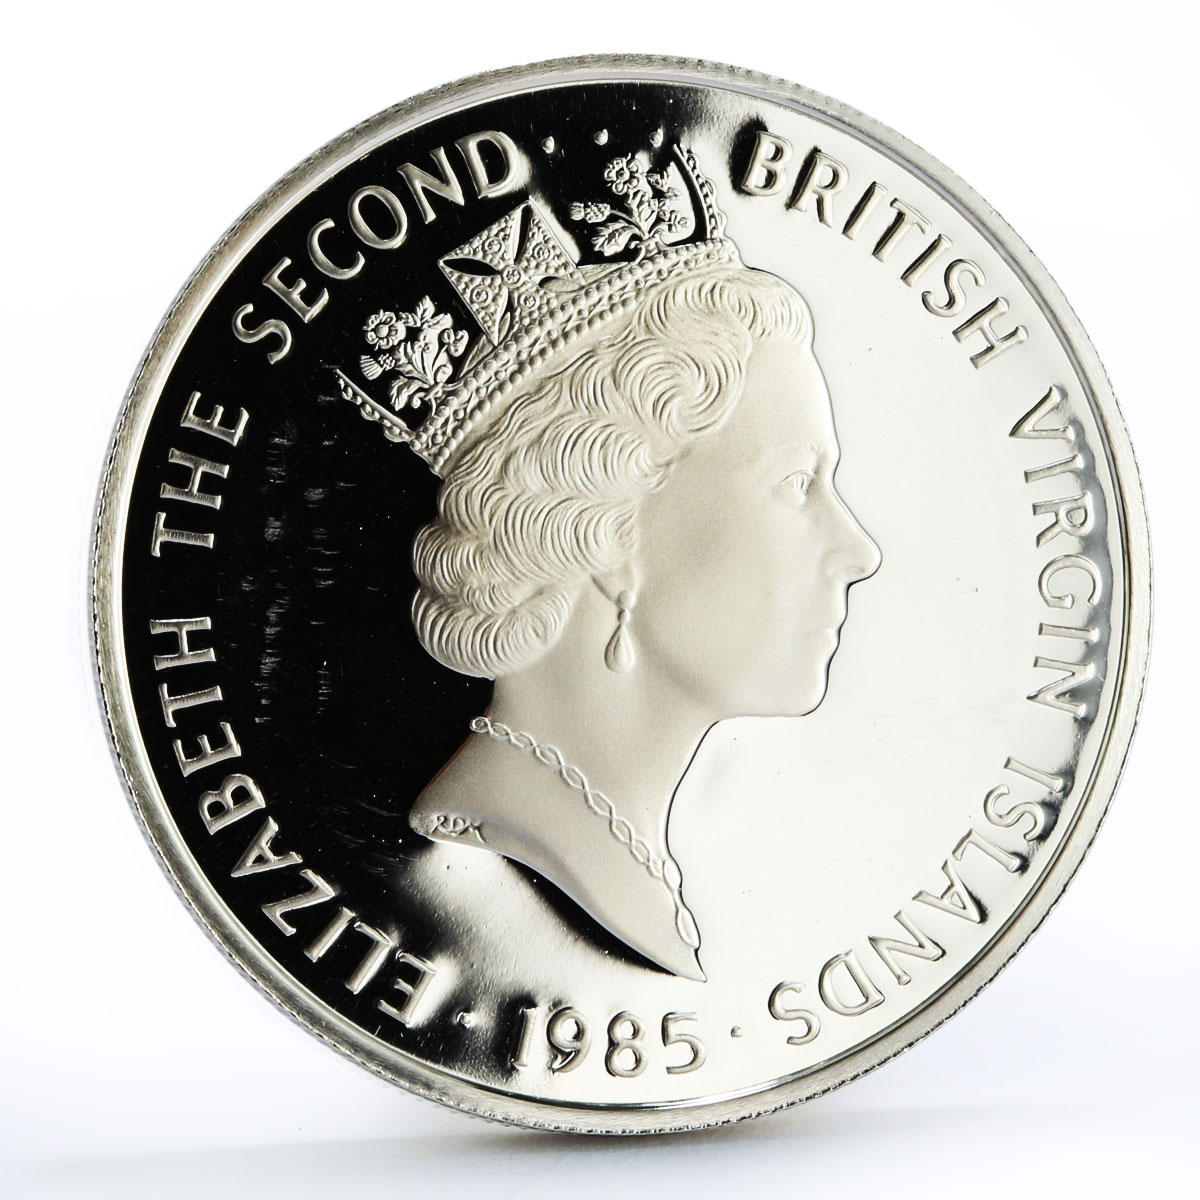 British Virgin Islands 20 dollars Sword Quillon proof silver coin 1985